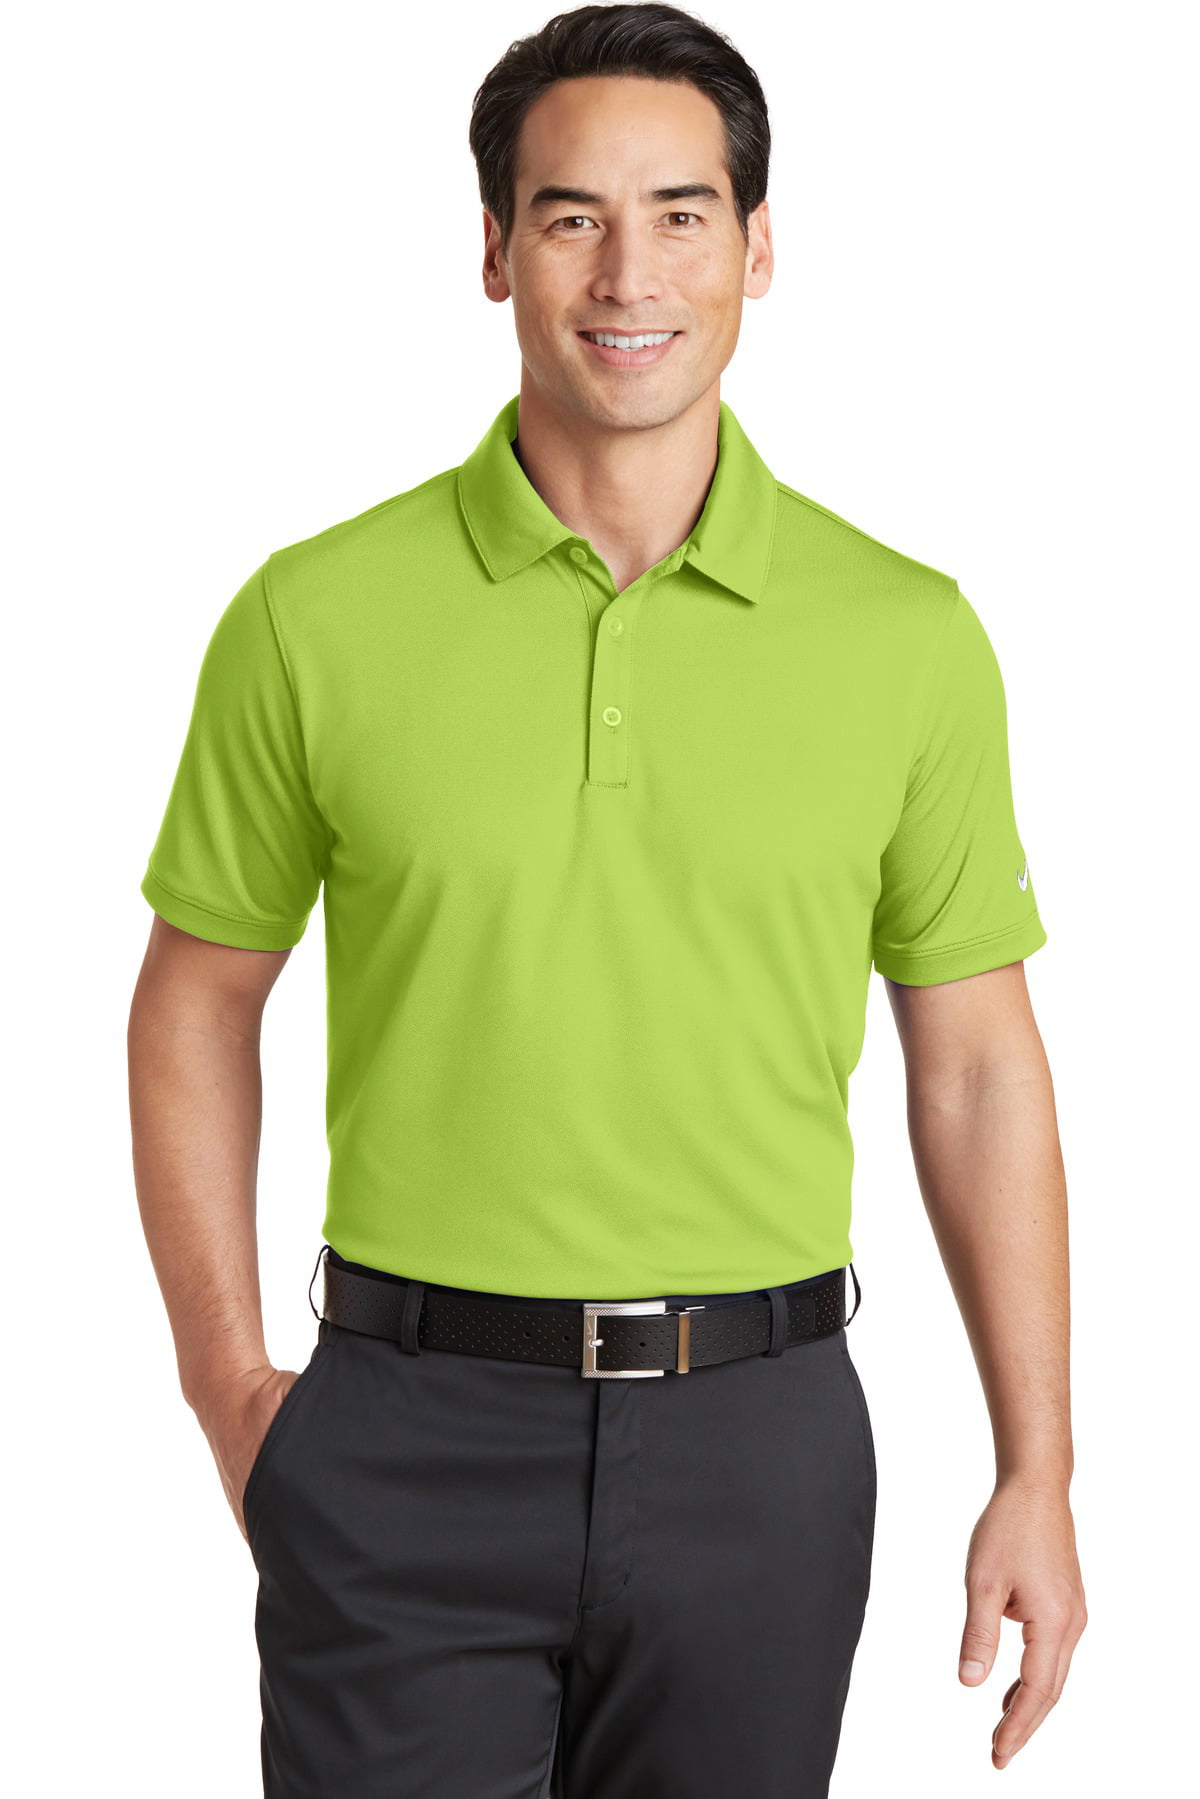 nike modern fit golf shirt